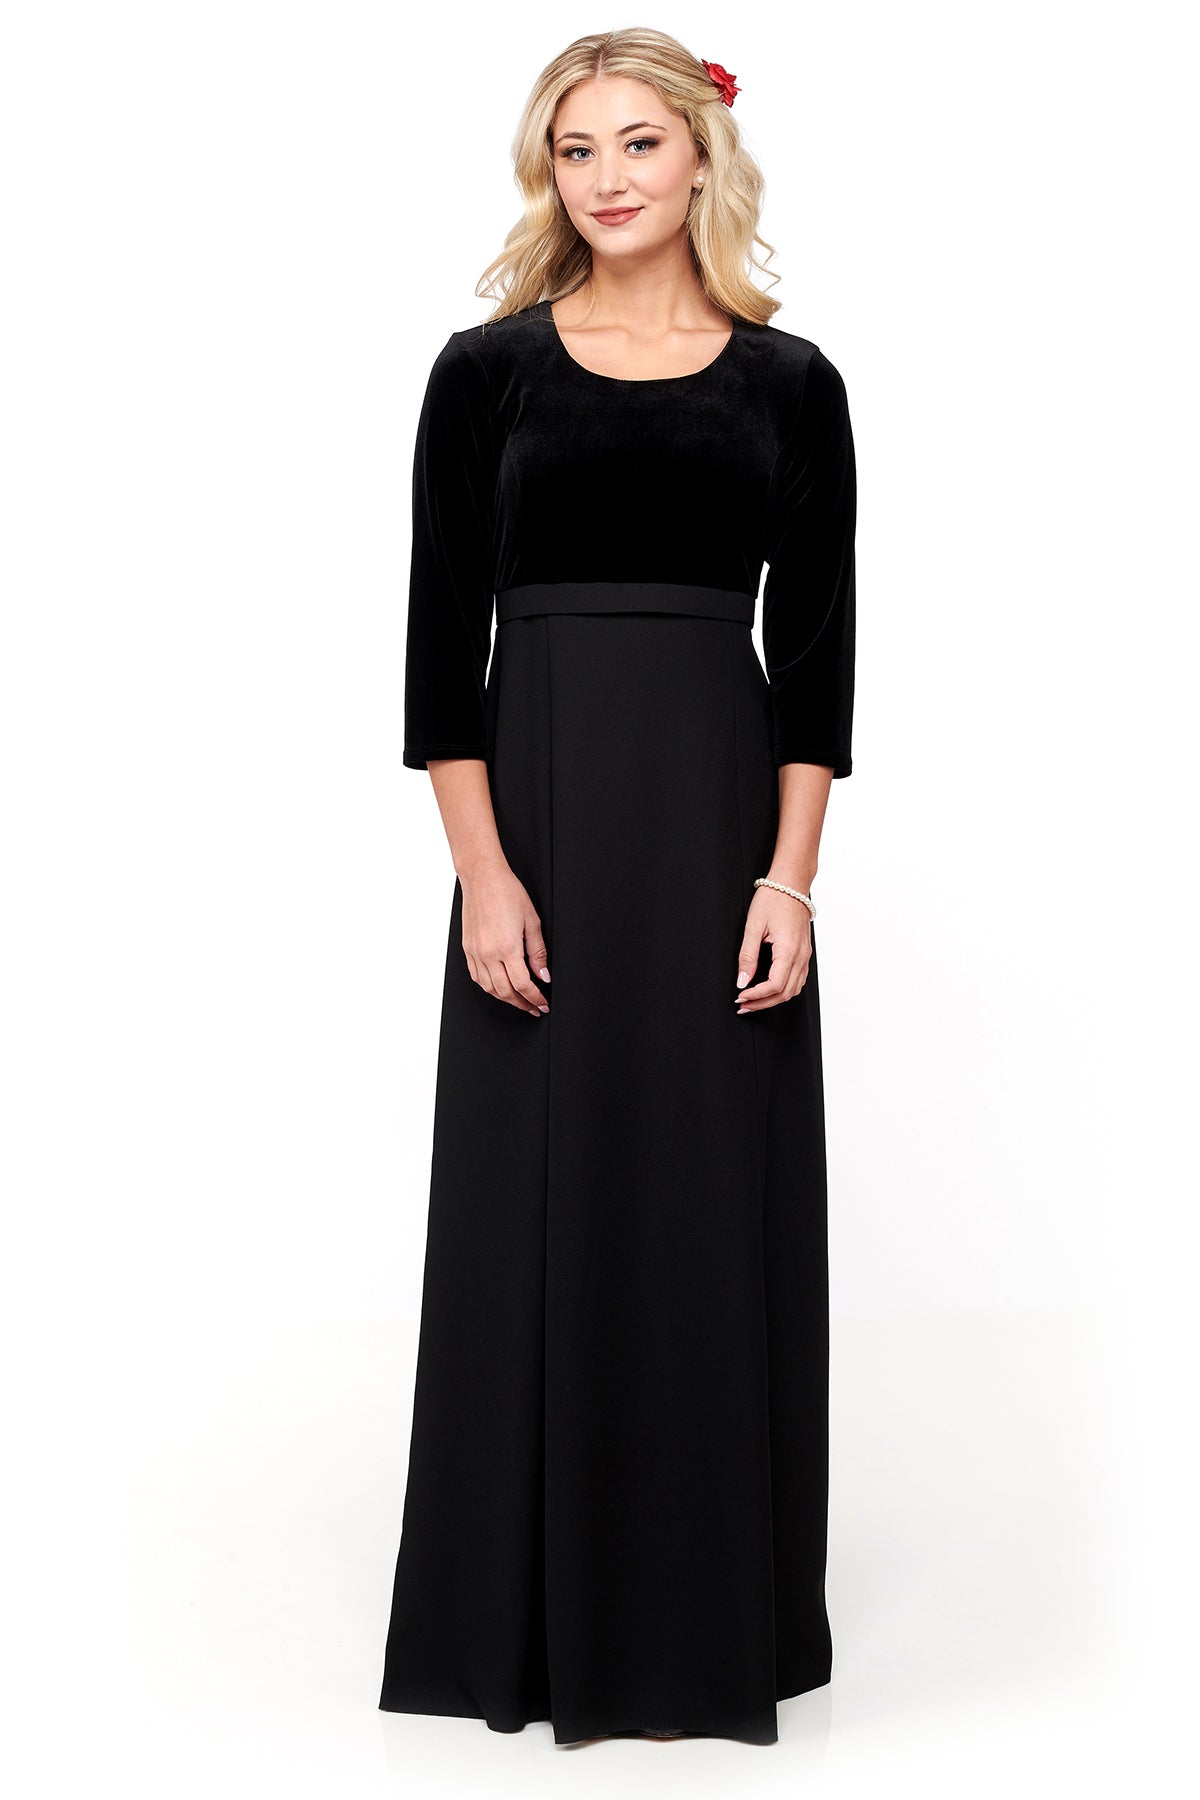 NEW! DEVYN (Style #2504) - Scoop Neck, 3/4 Sleeve, Velvet bodice Gown